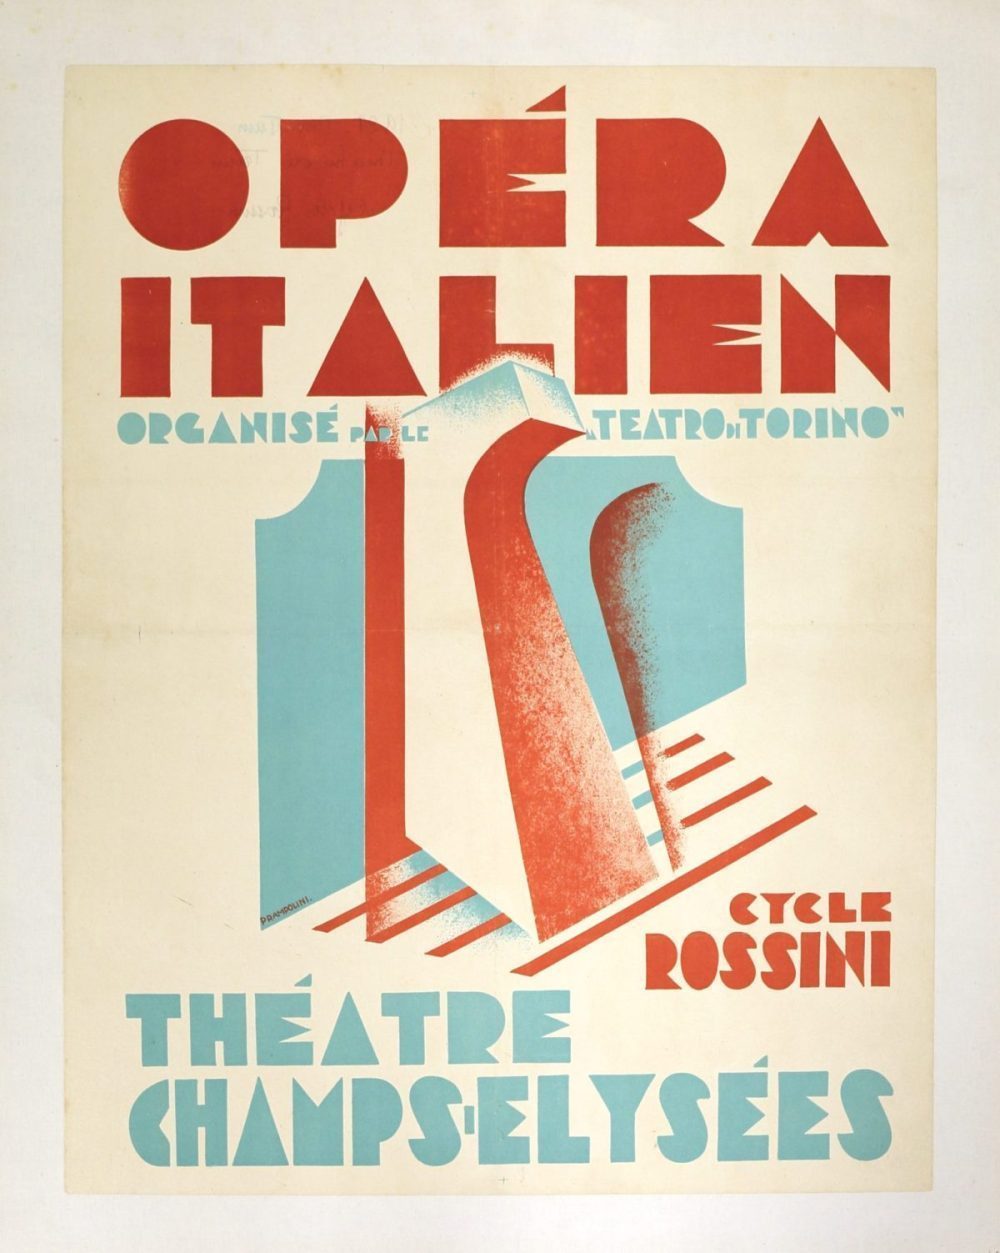 Enrico Prampolini. Théâtre Champs-Elysées. Opéra Italien, 1929. Lithograph on paper mounted on linen. Merrill C. Berman Collection. 